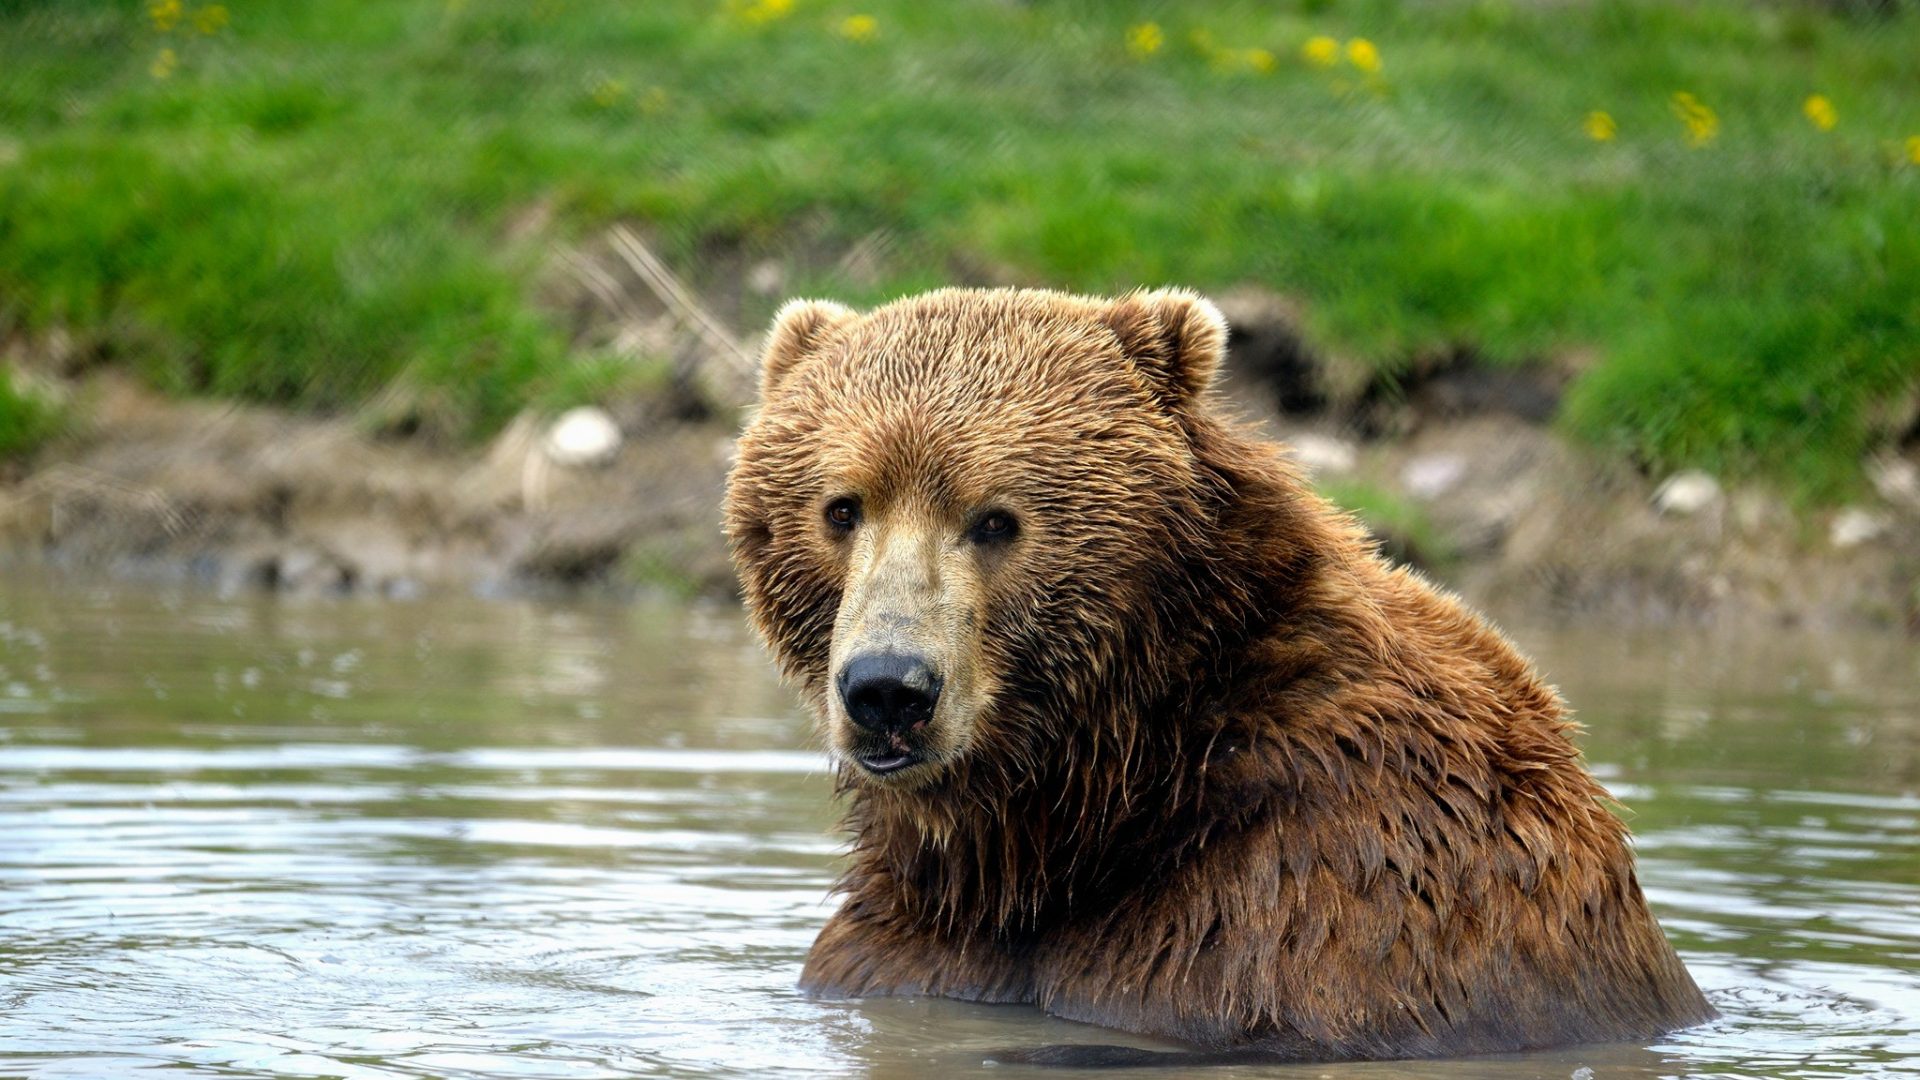 7 Cool Facts About Our Kodiak Bears: Kodiak bear in zoo pond